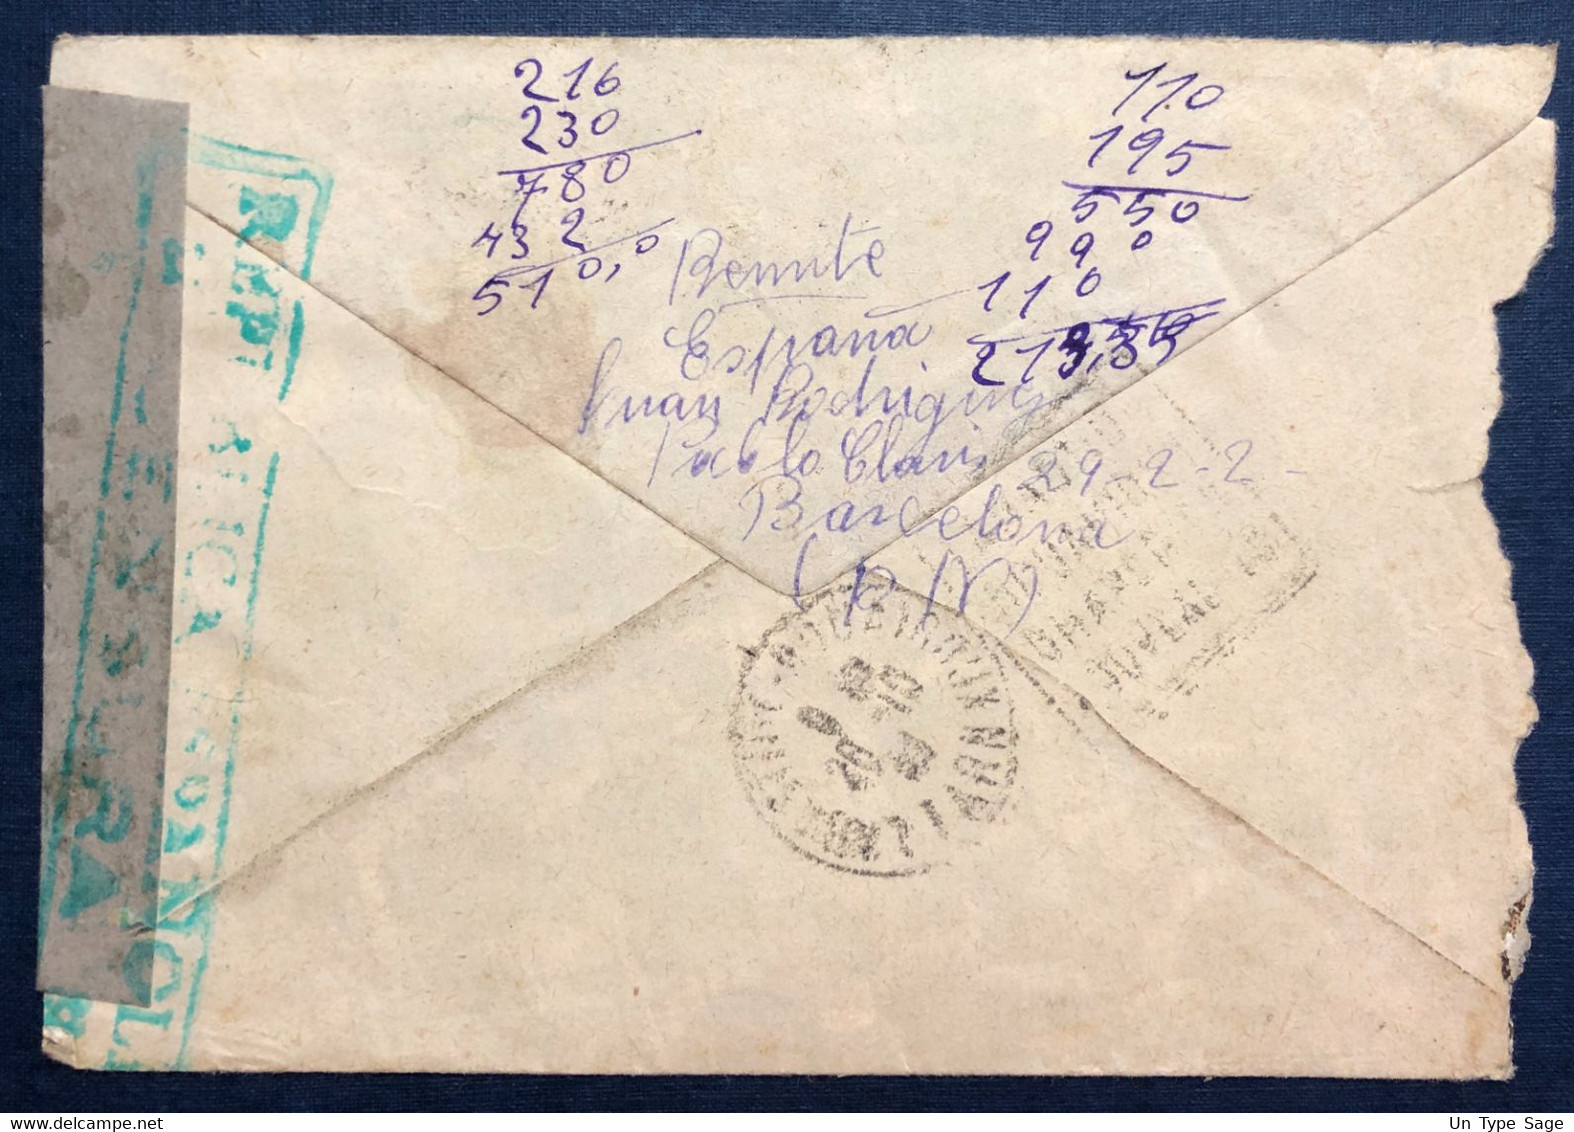 Espagne, Divers Sur Enveloppe 18.10.1938 + Censure - (B4114) - Briefe U. Dokumente